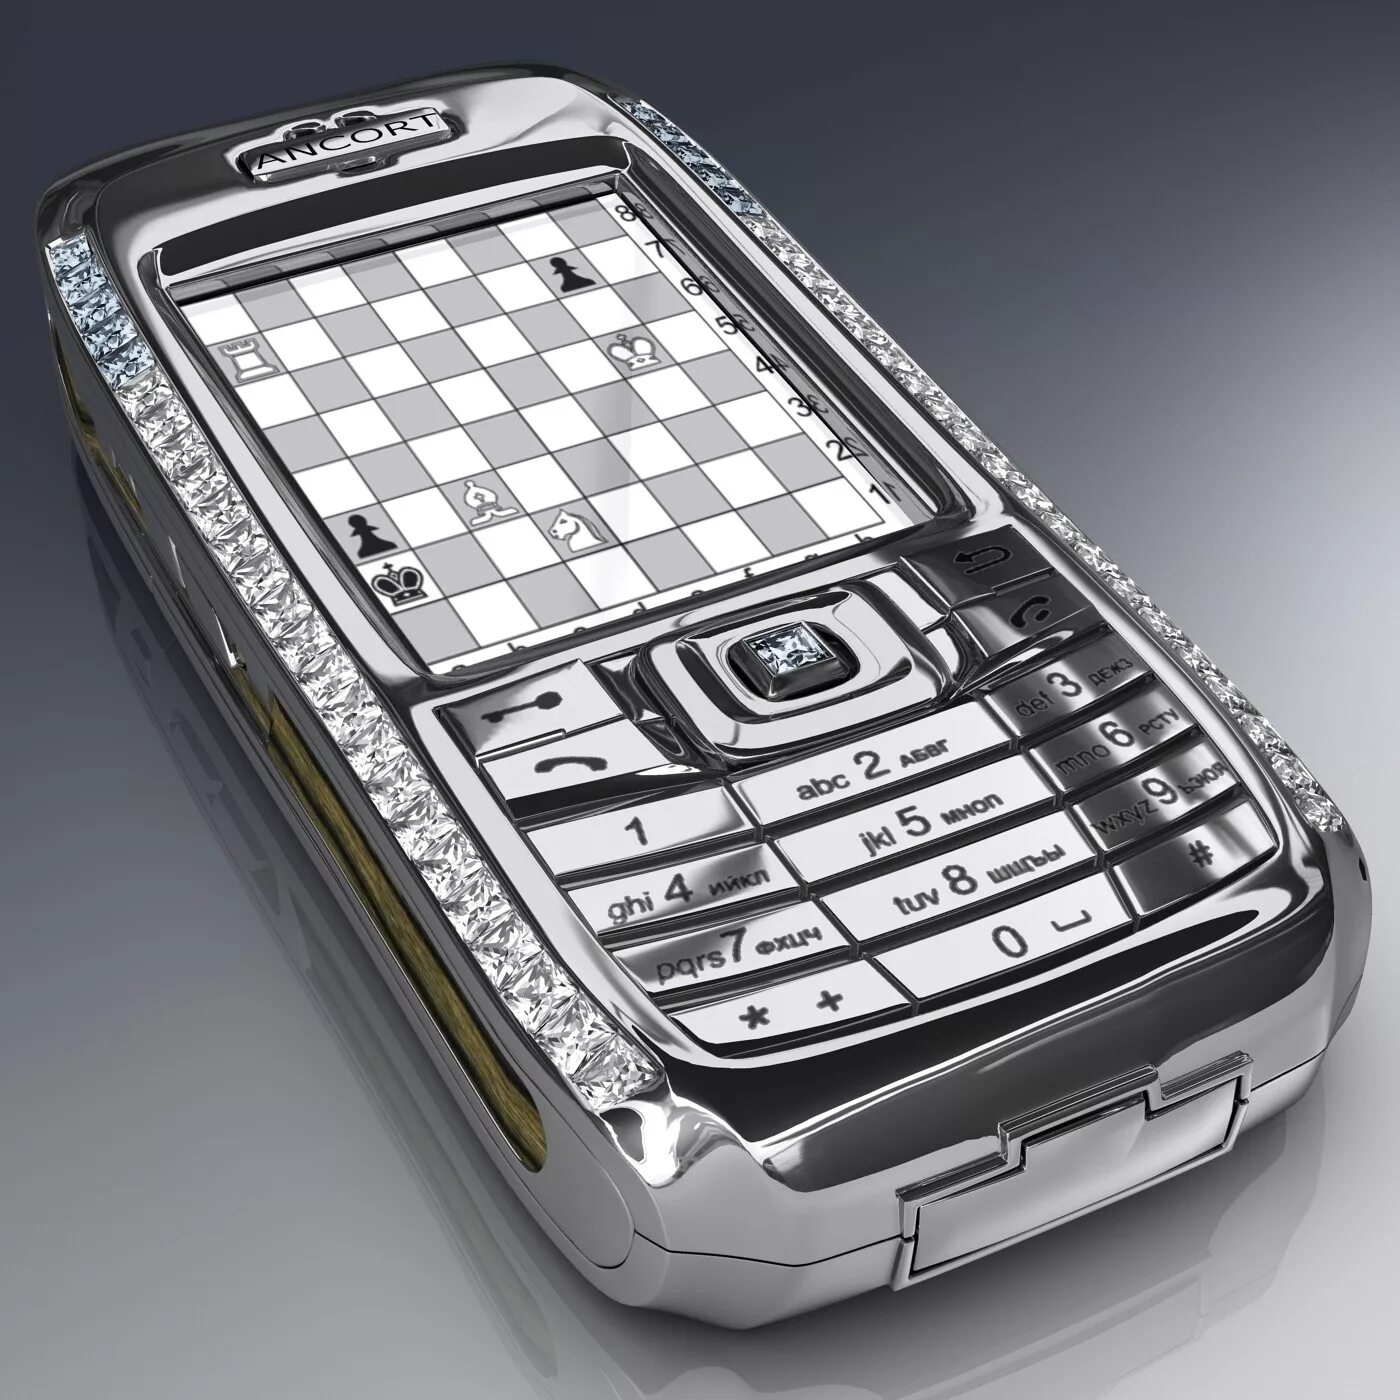 Бесплатный телефон. Diamond Crypto smartphone. Sony Ericsson Black Diamond. Diamond Crypto smartphone 1.3 млн долларов. Diamond Crypto smartphone в рублях.